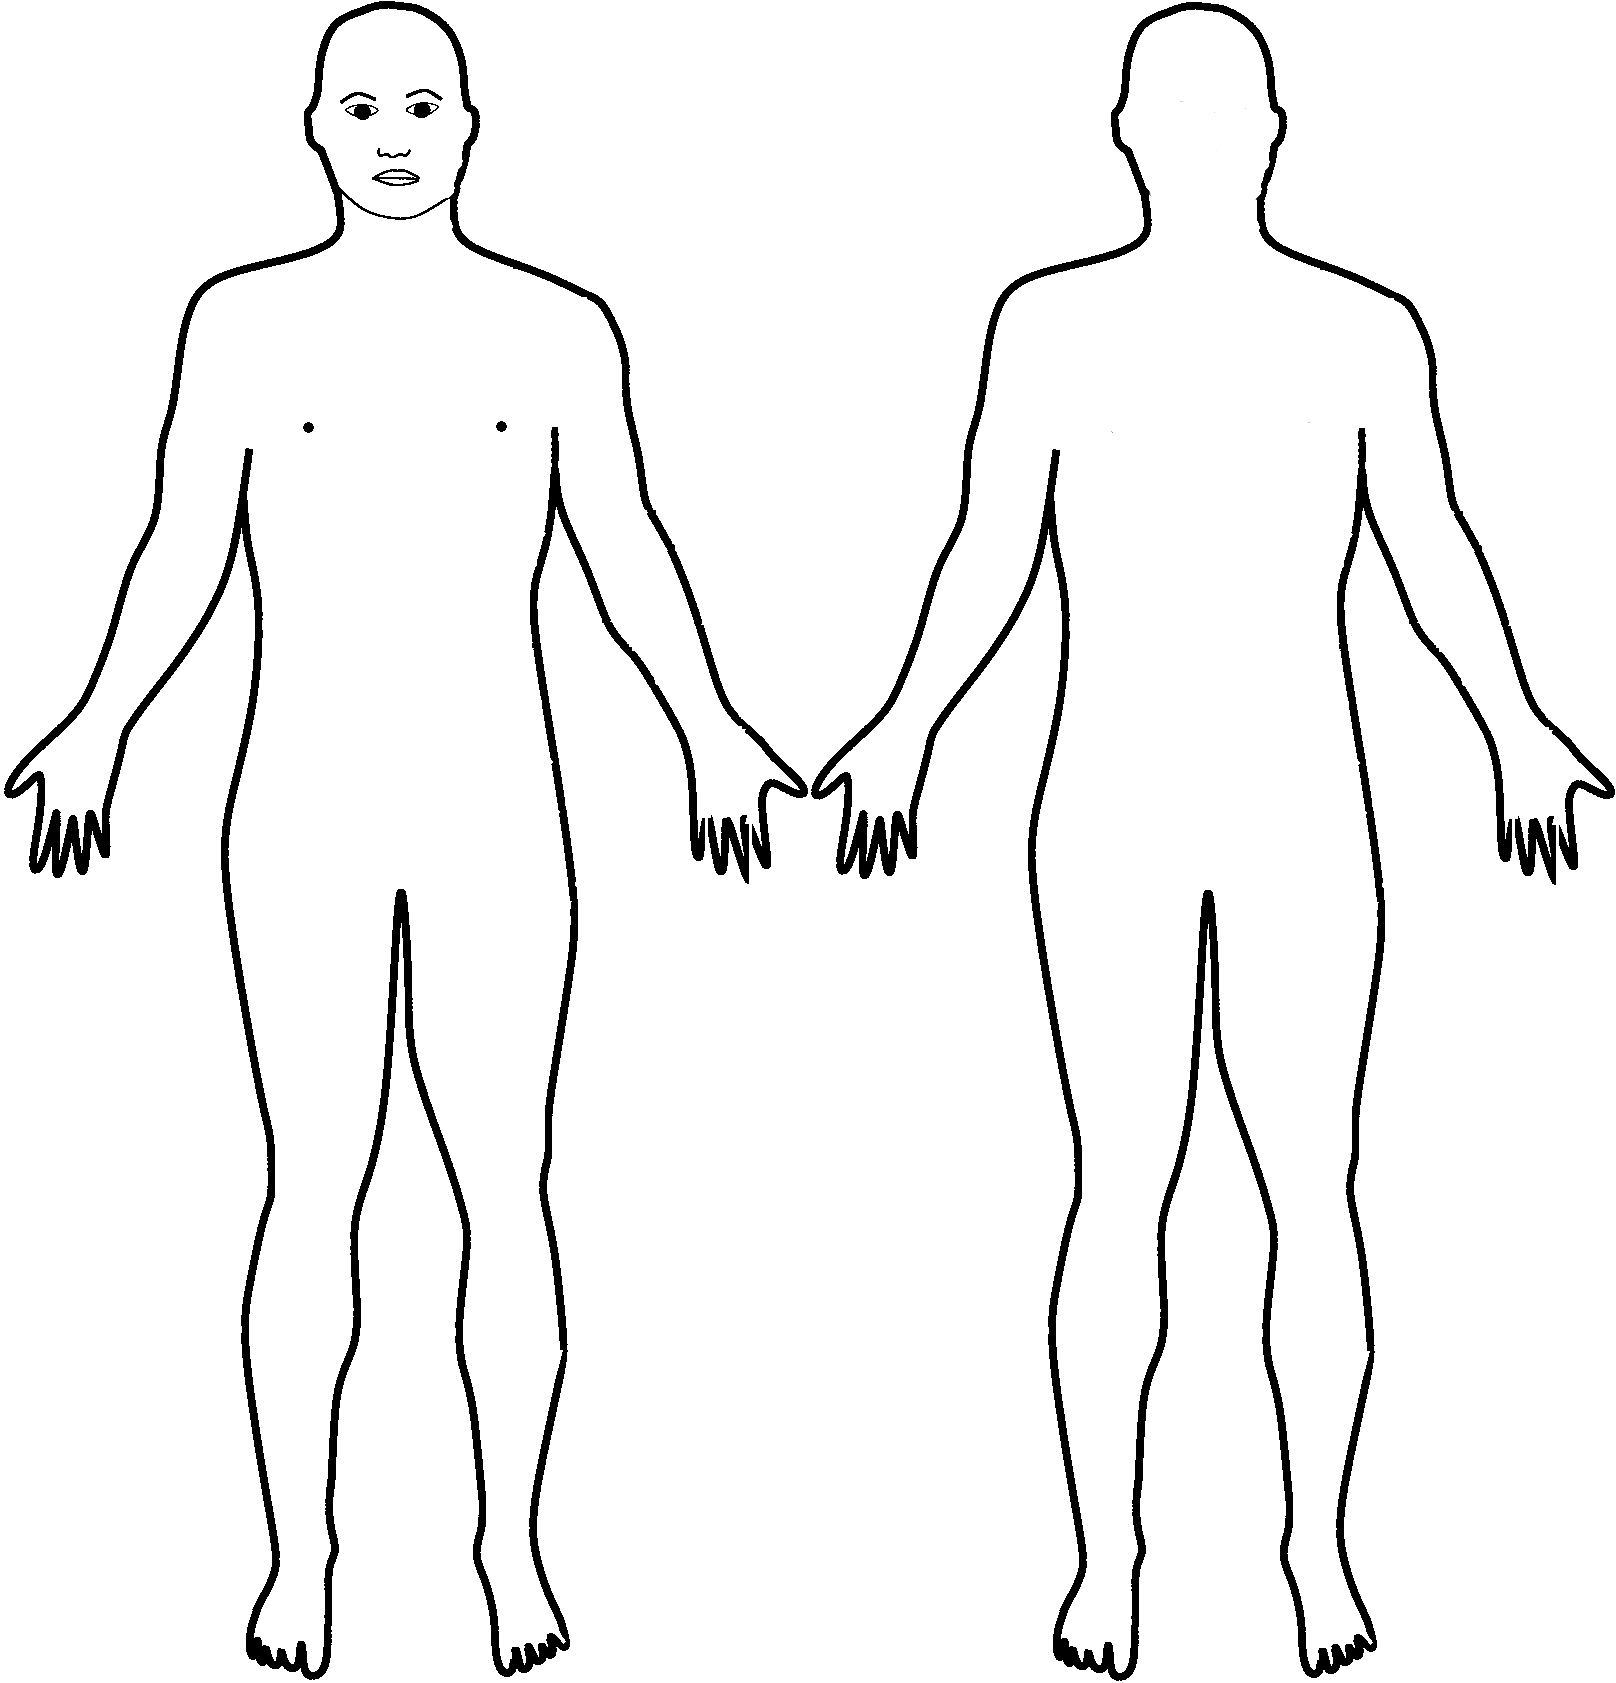 Body contour. Контур человека. Очертание тела человека. Контур человеческого тела. Контурное изображение человека.